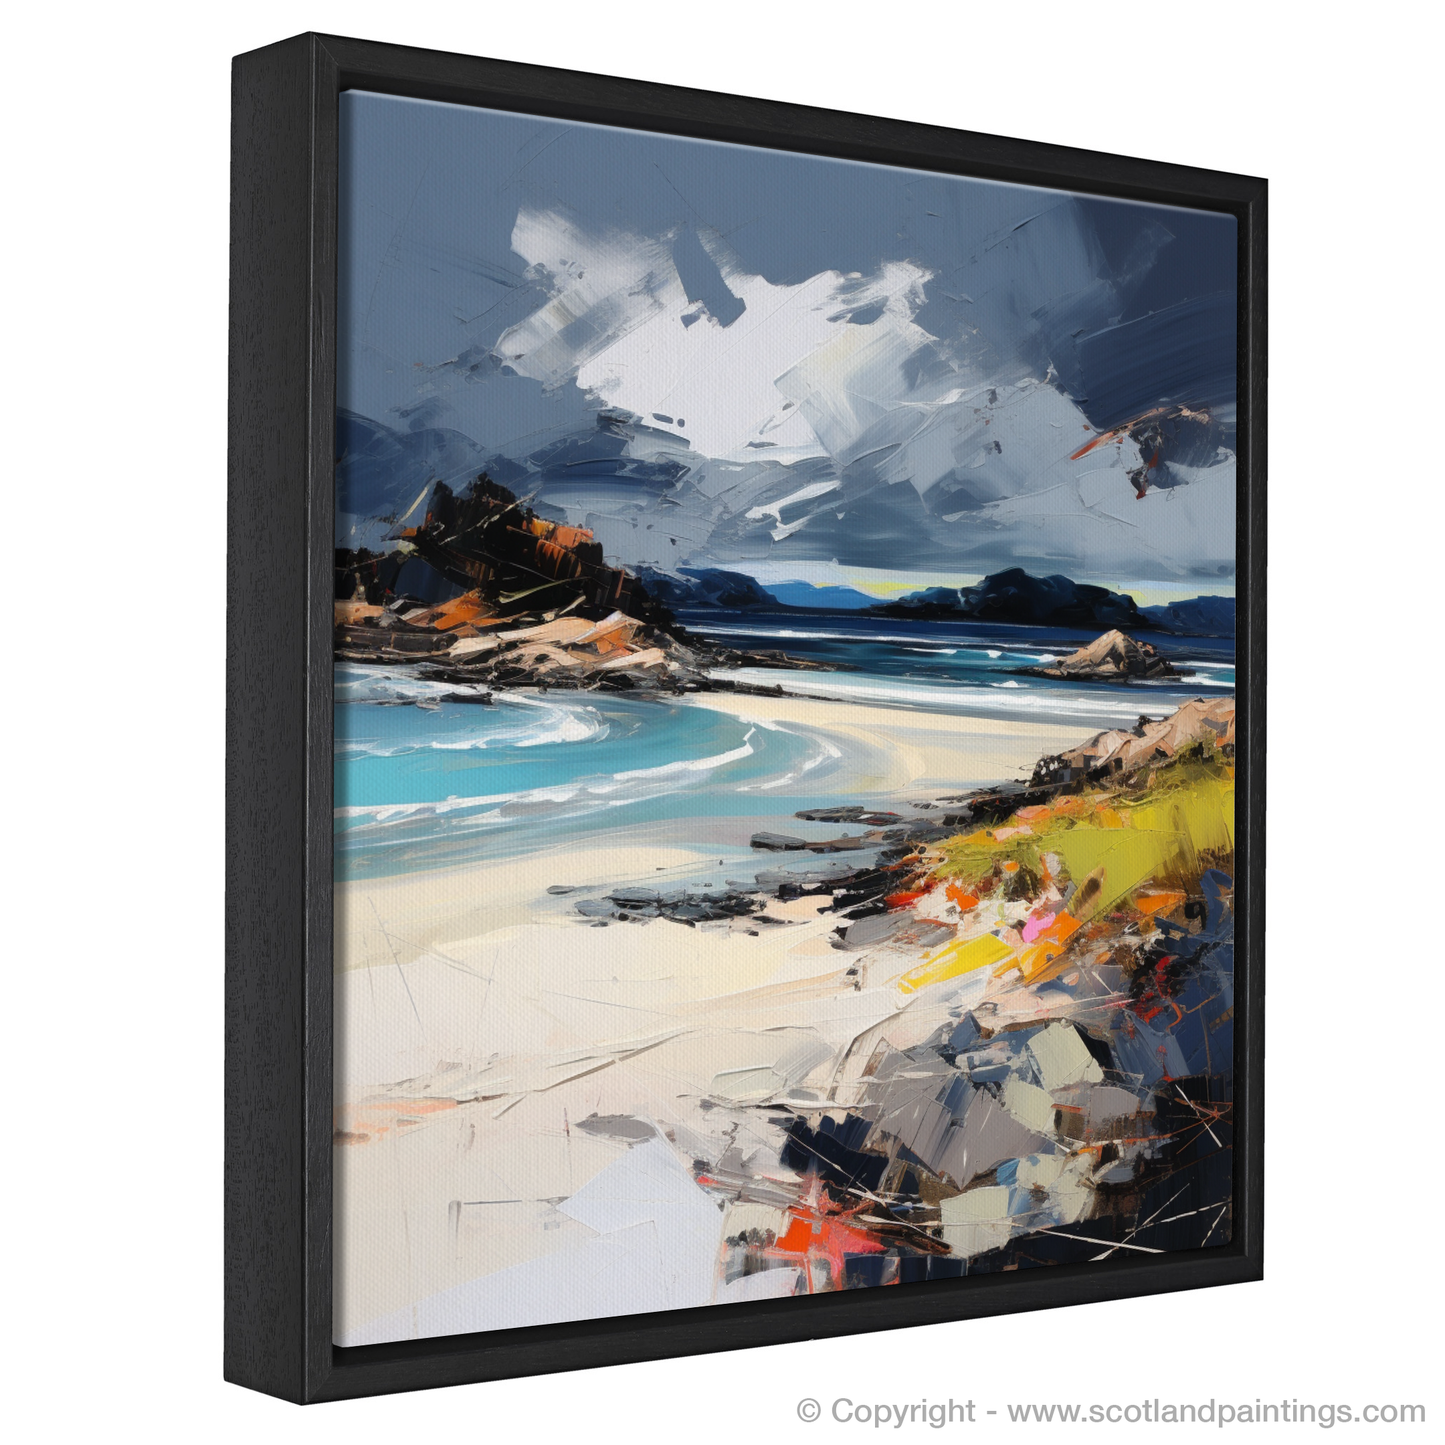 Painting and Art Print of Camusdarach Beach, Arisaig entitled "Expressionist Ode to Camusdarach Beach".